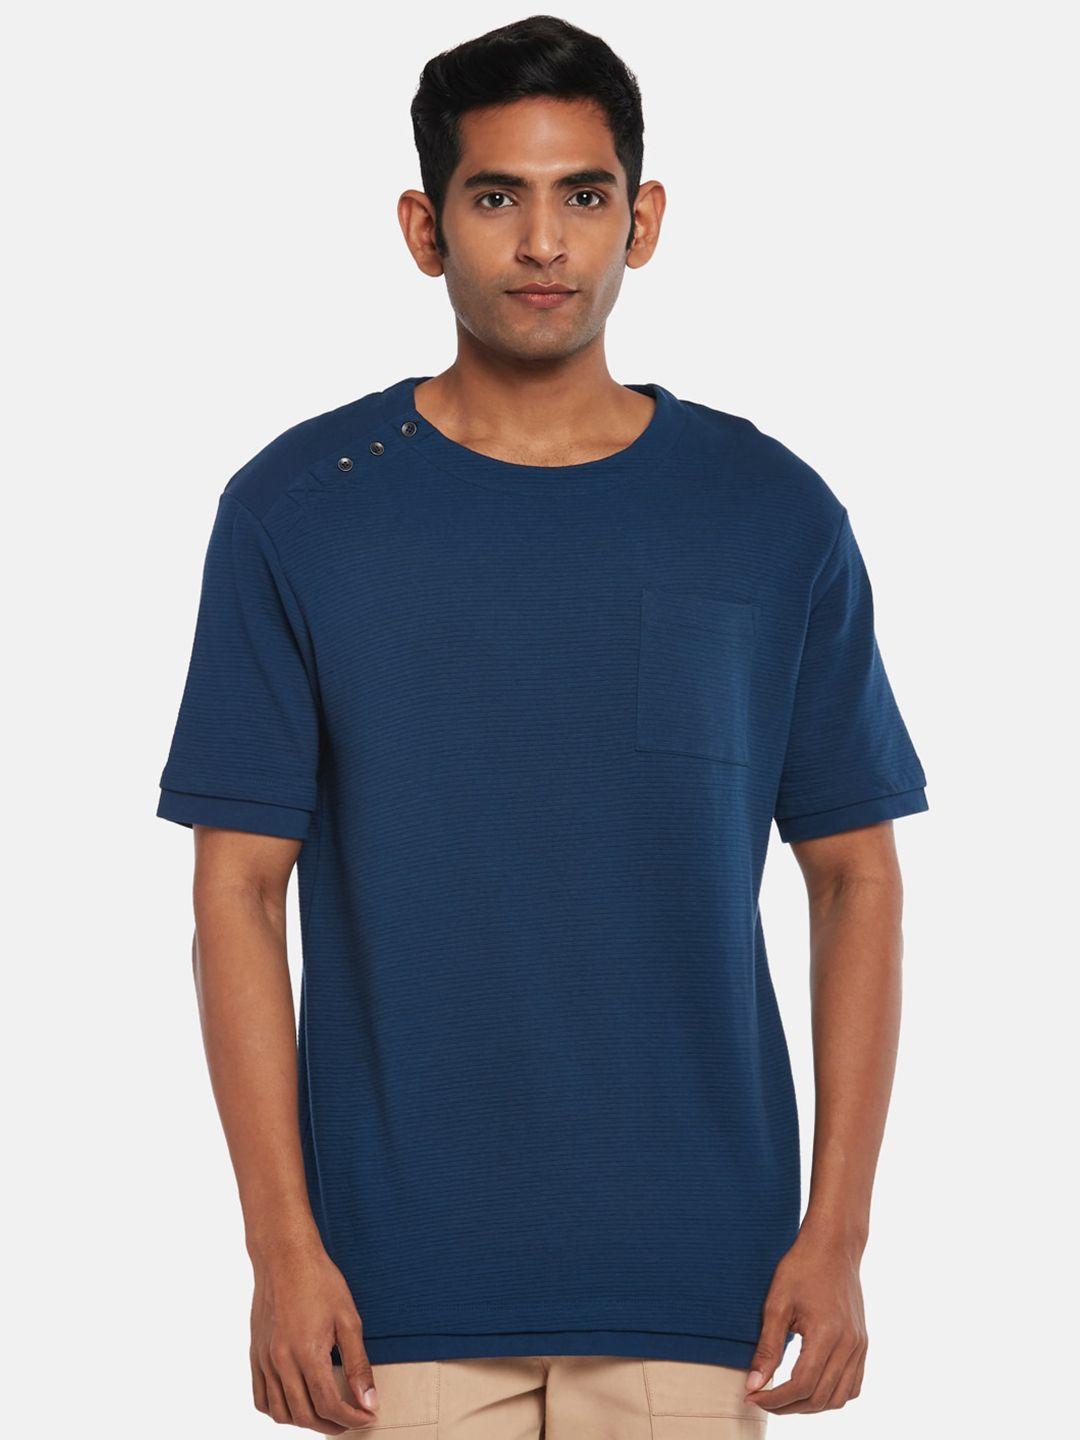 7-alt-by-pantaloons-round-neck-cotton-t-shirt